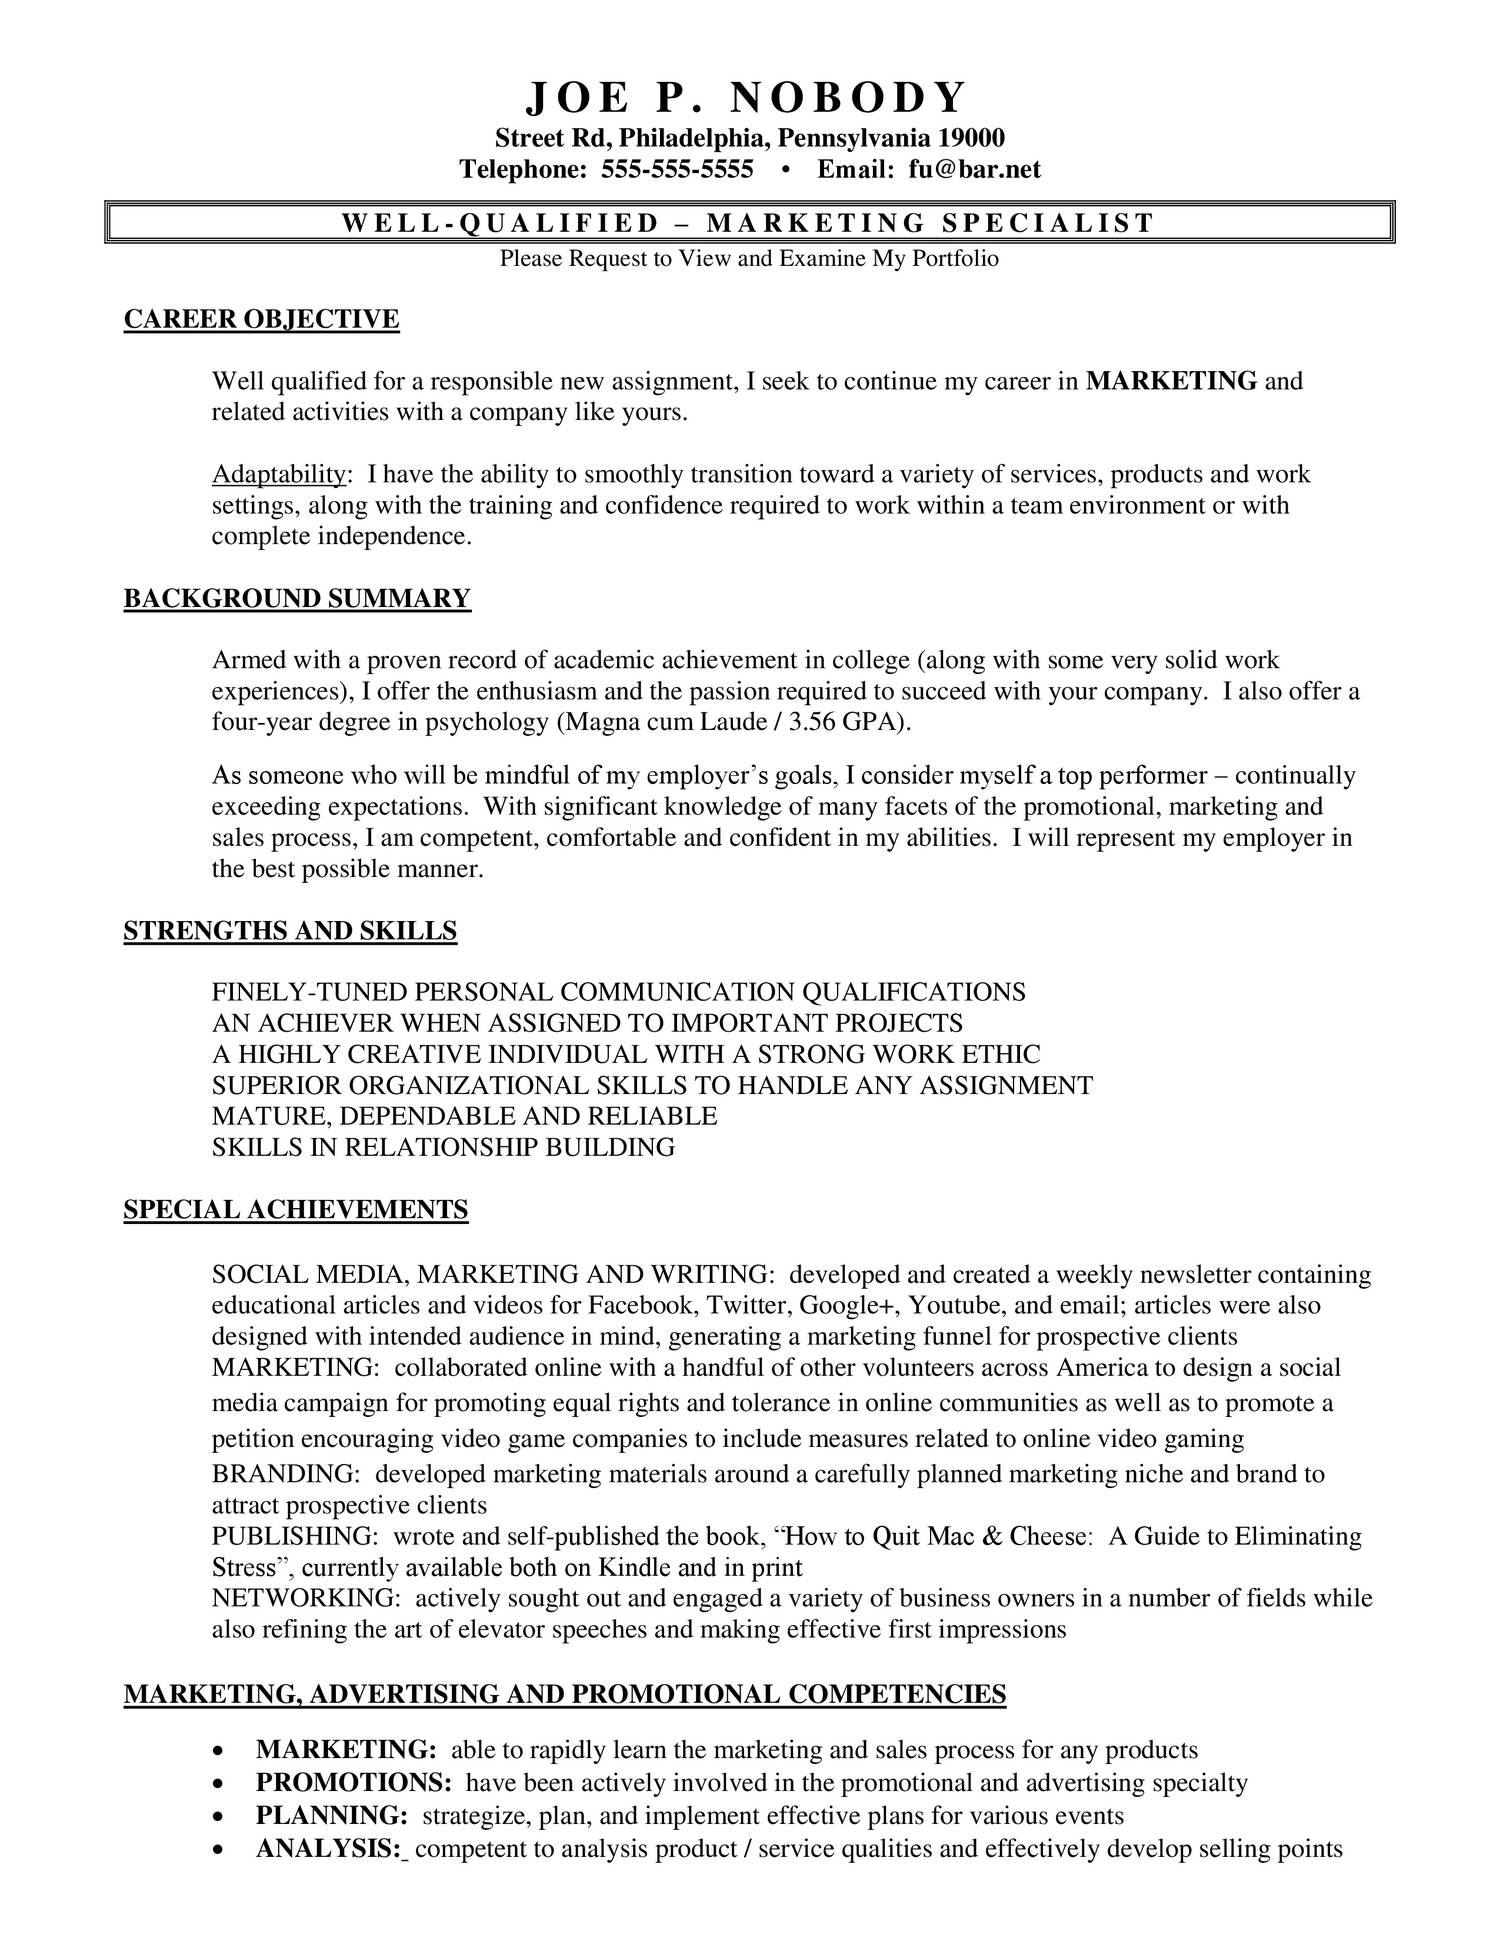 rawls college of business resume template reddit